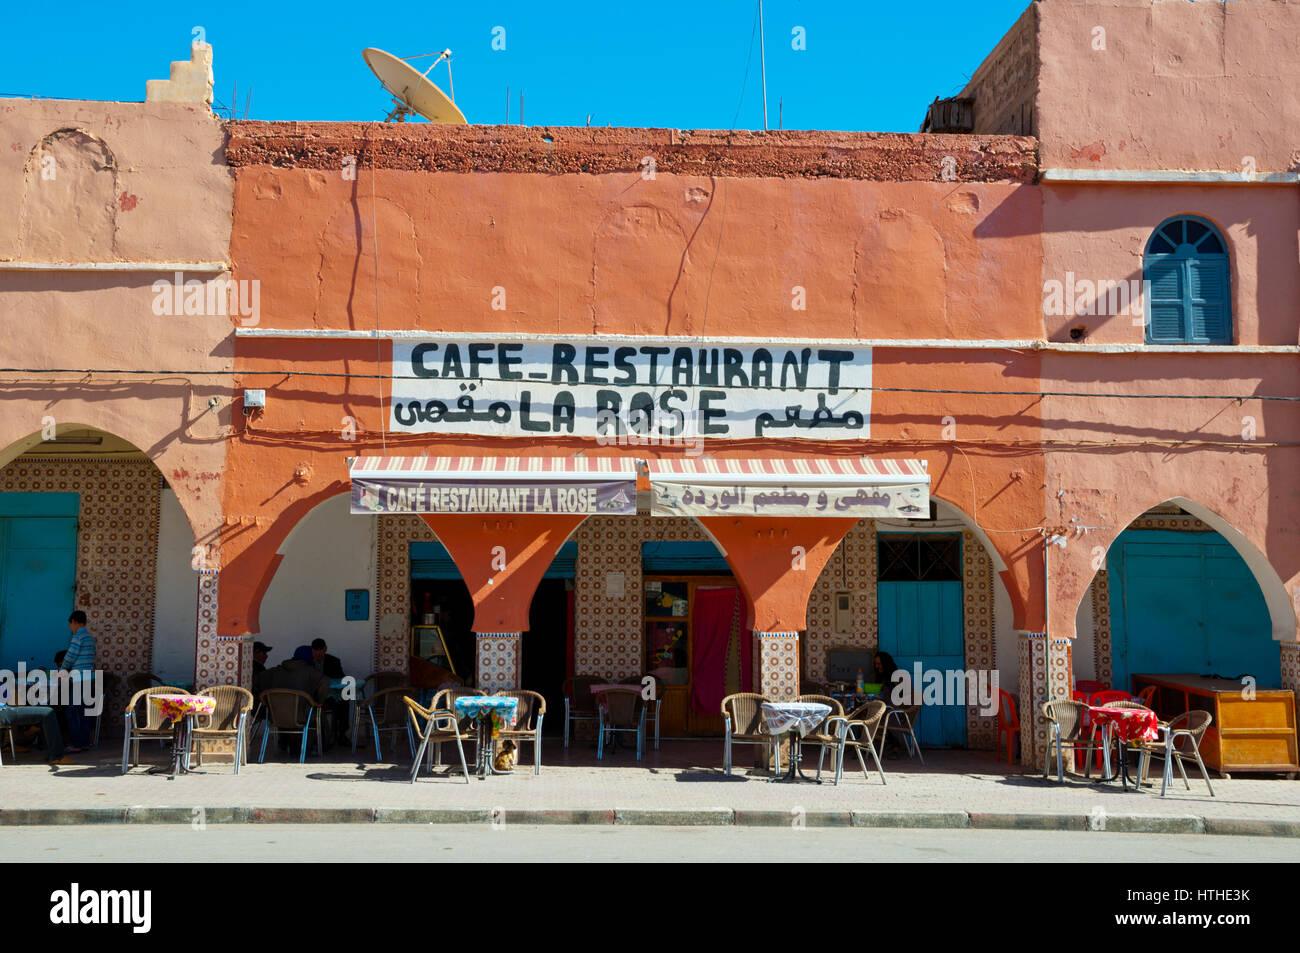 Cafe restaurant la rose, Avenue Mohammed V, main street, Tata, Morocco Stock Photo